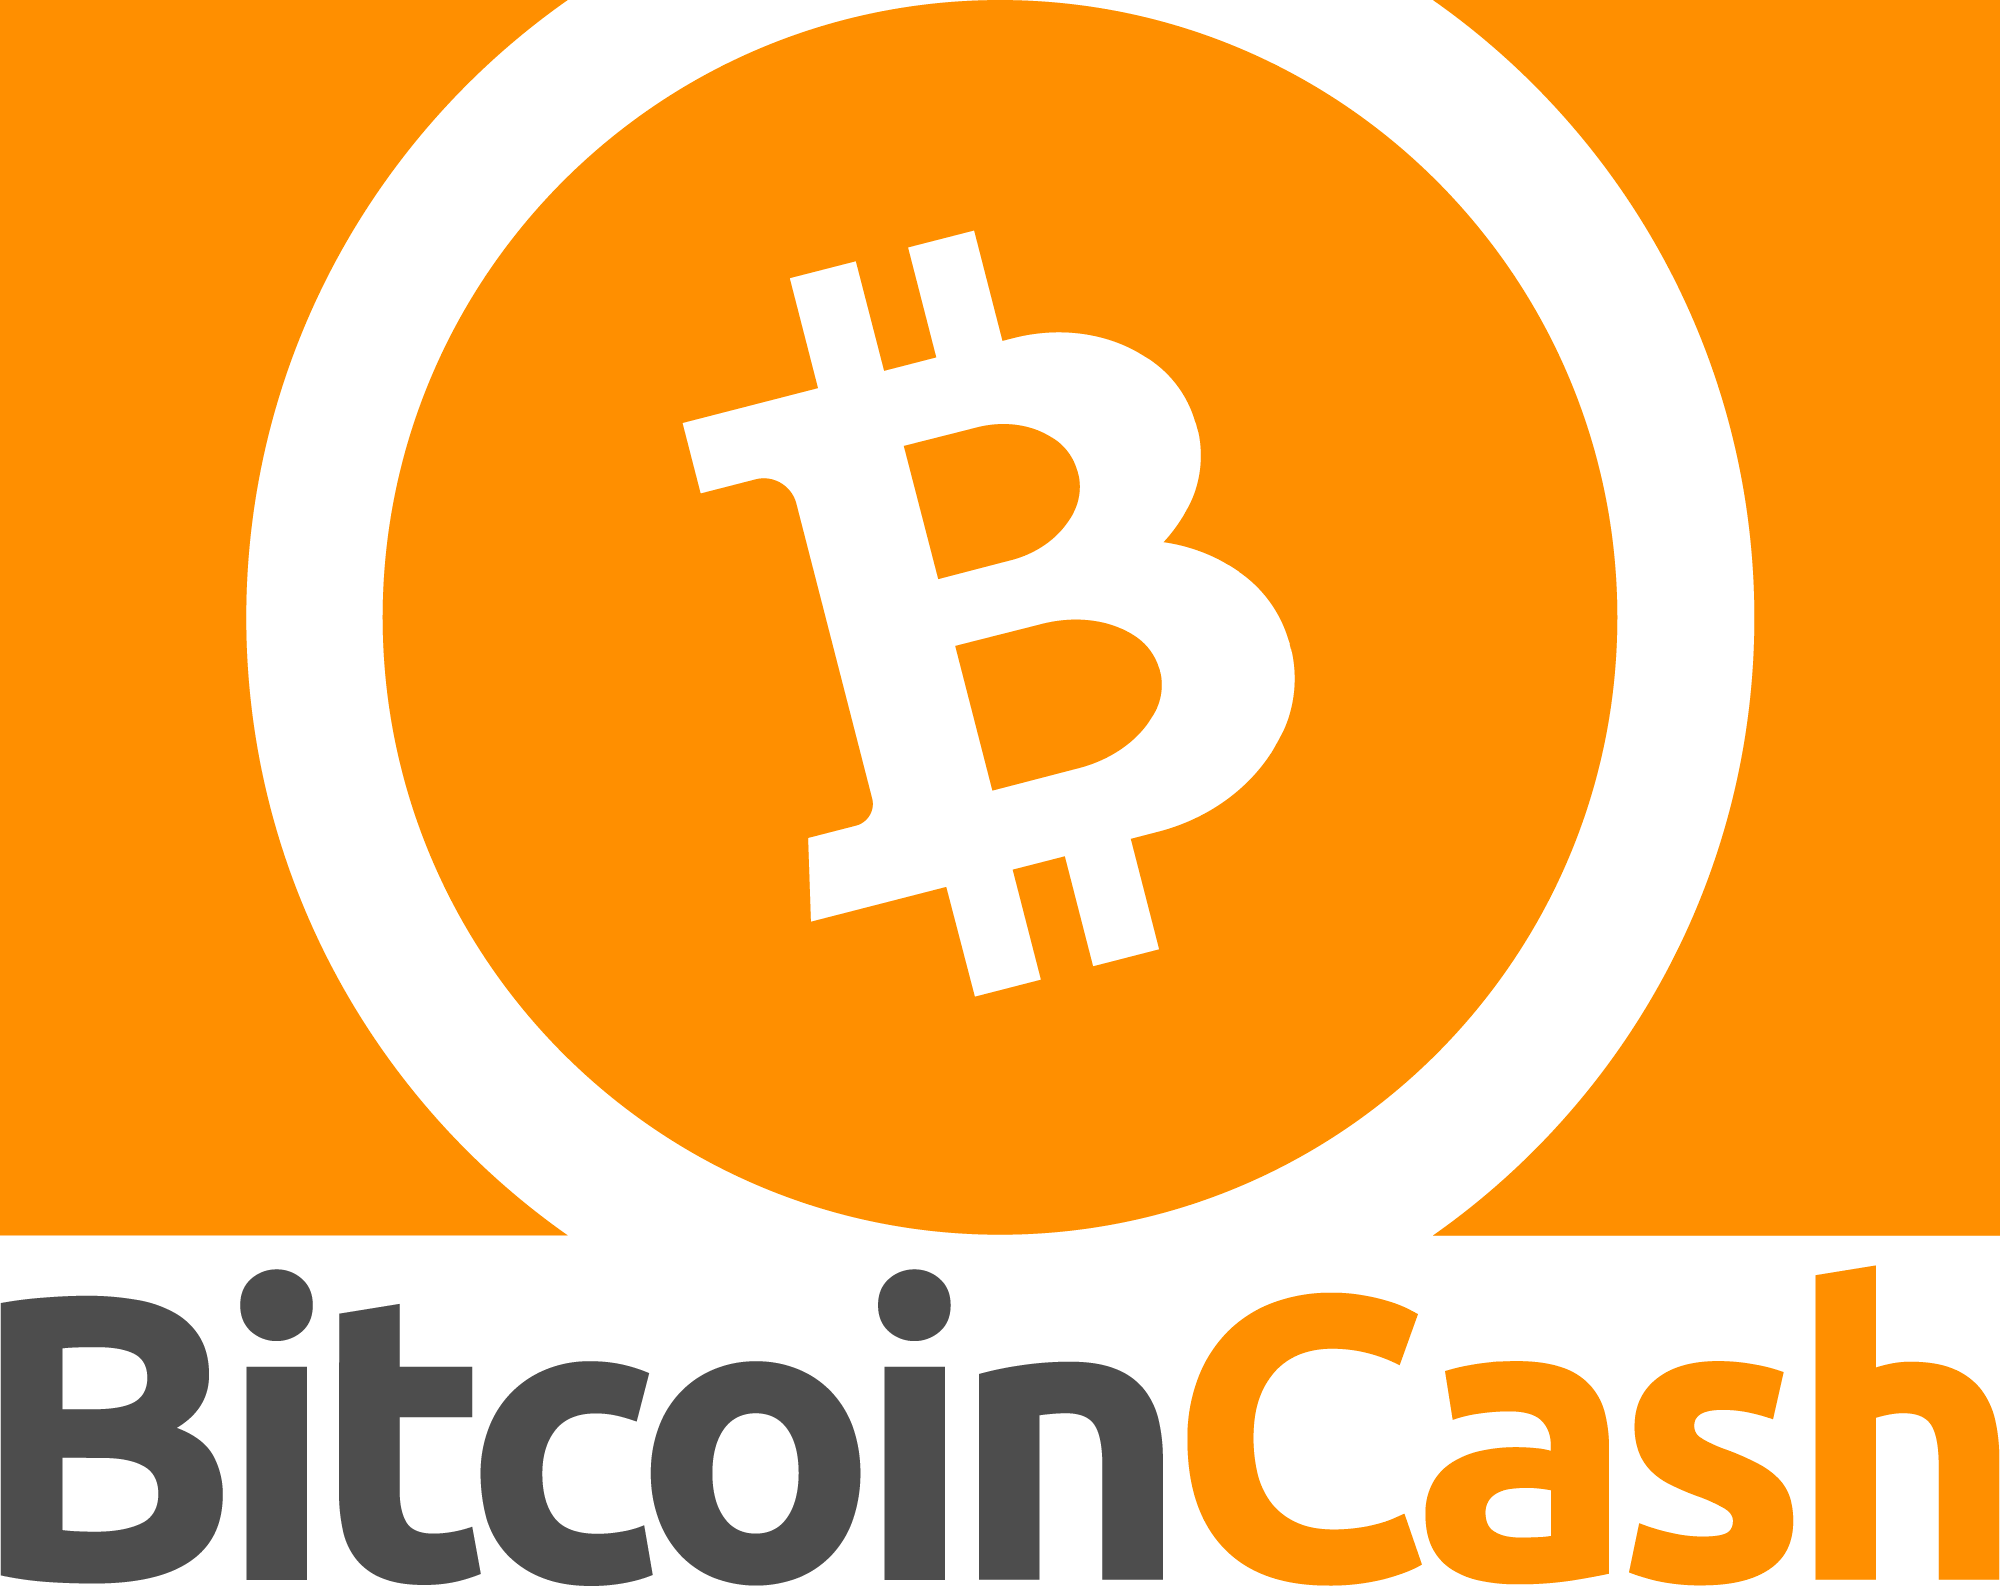 I Got Cash Logo - What is Bitcoin Cash? - Bitcoin.com